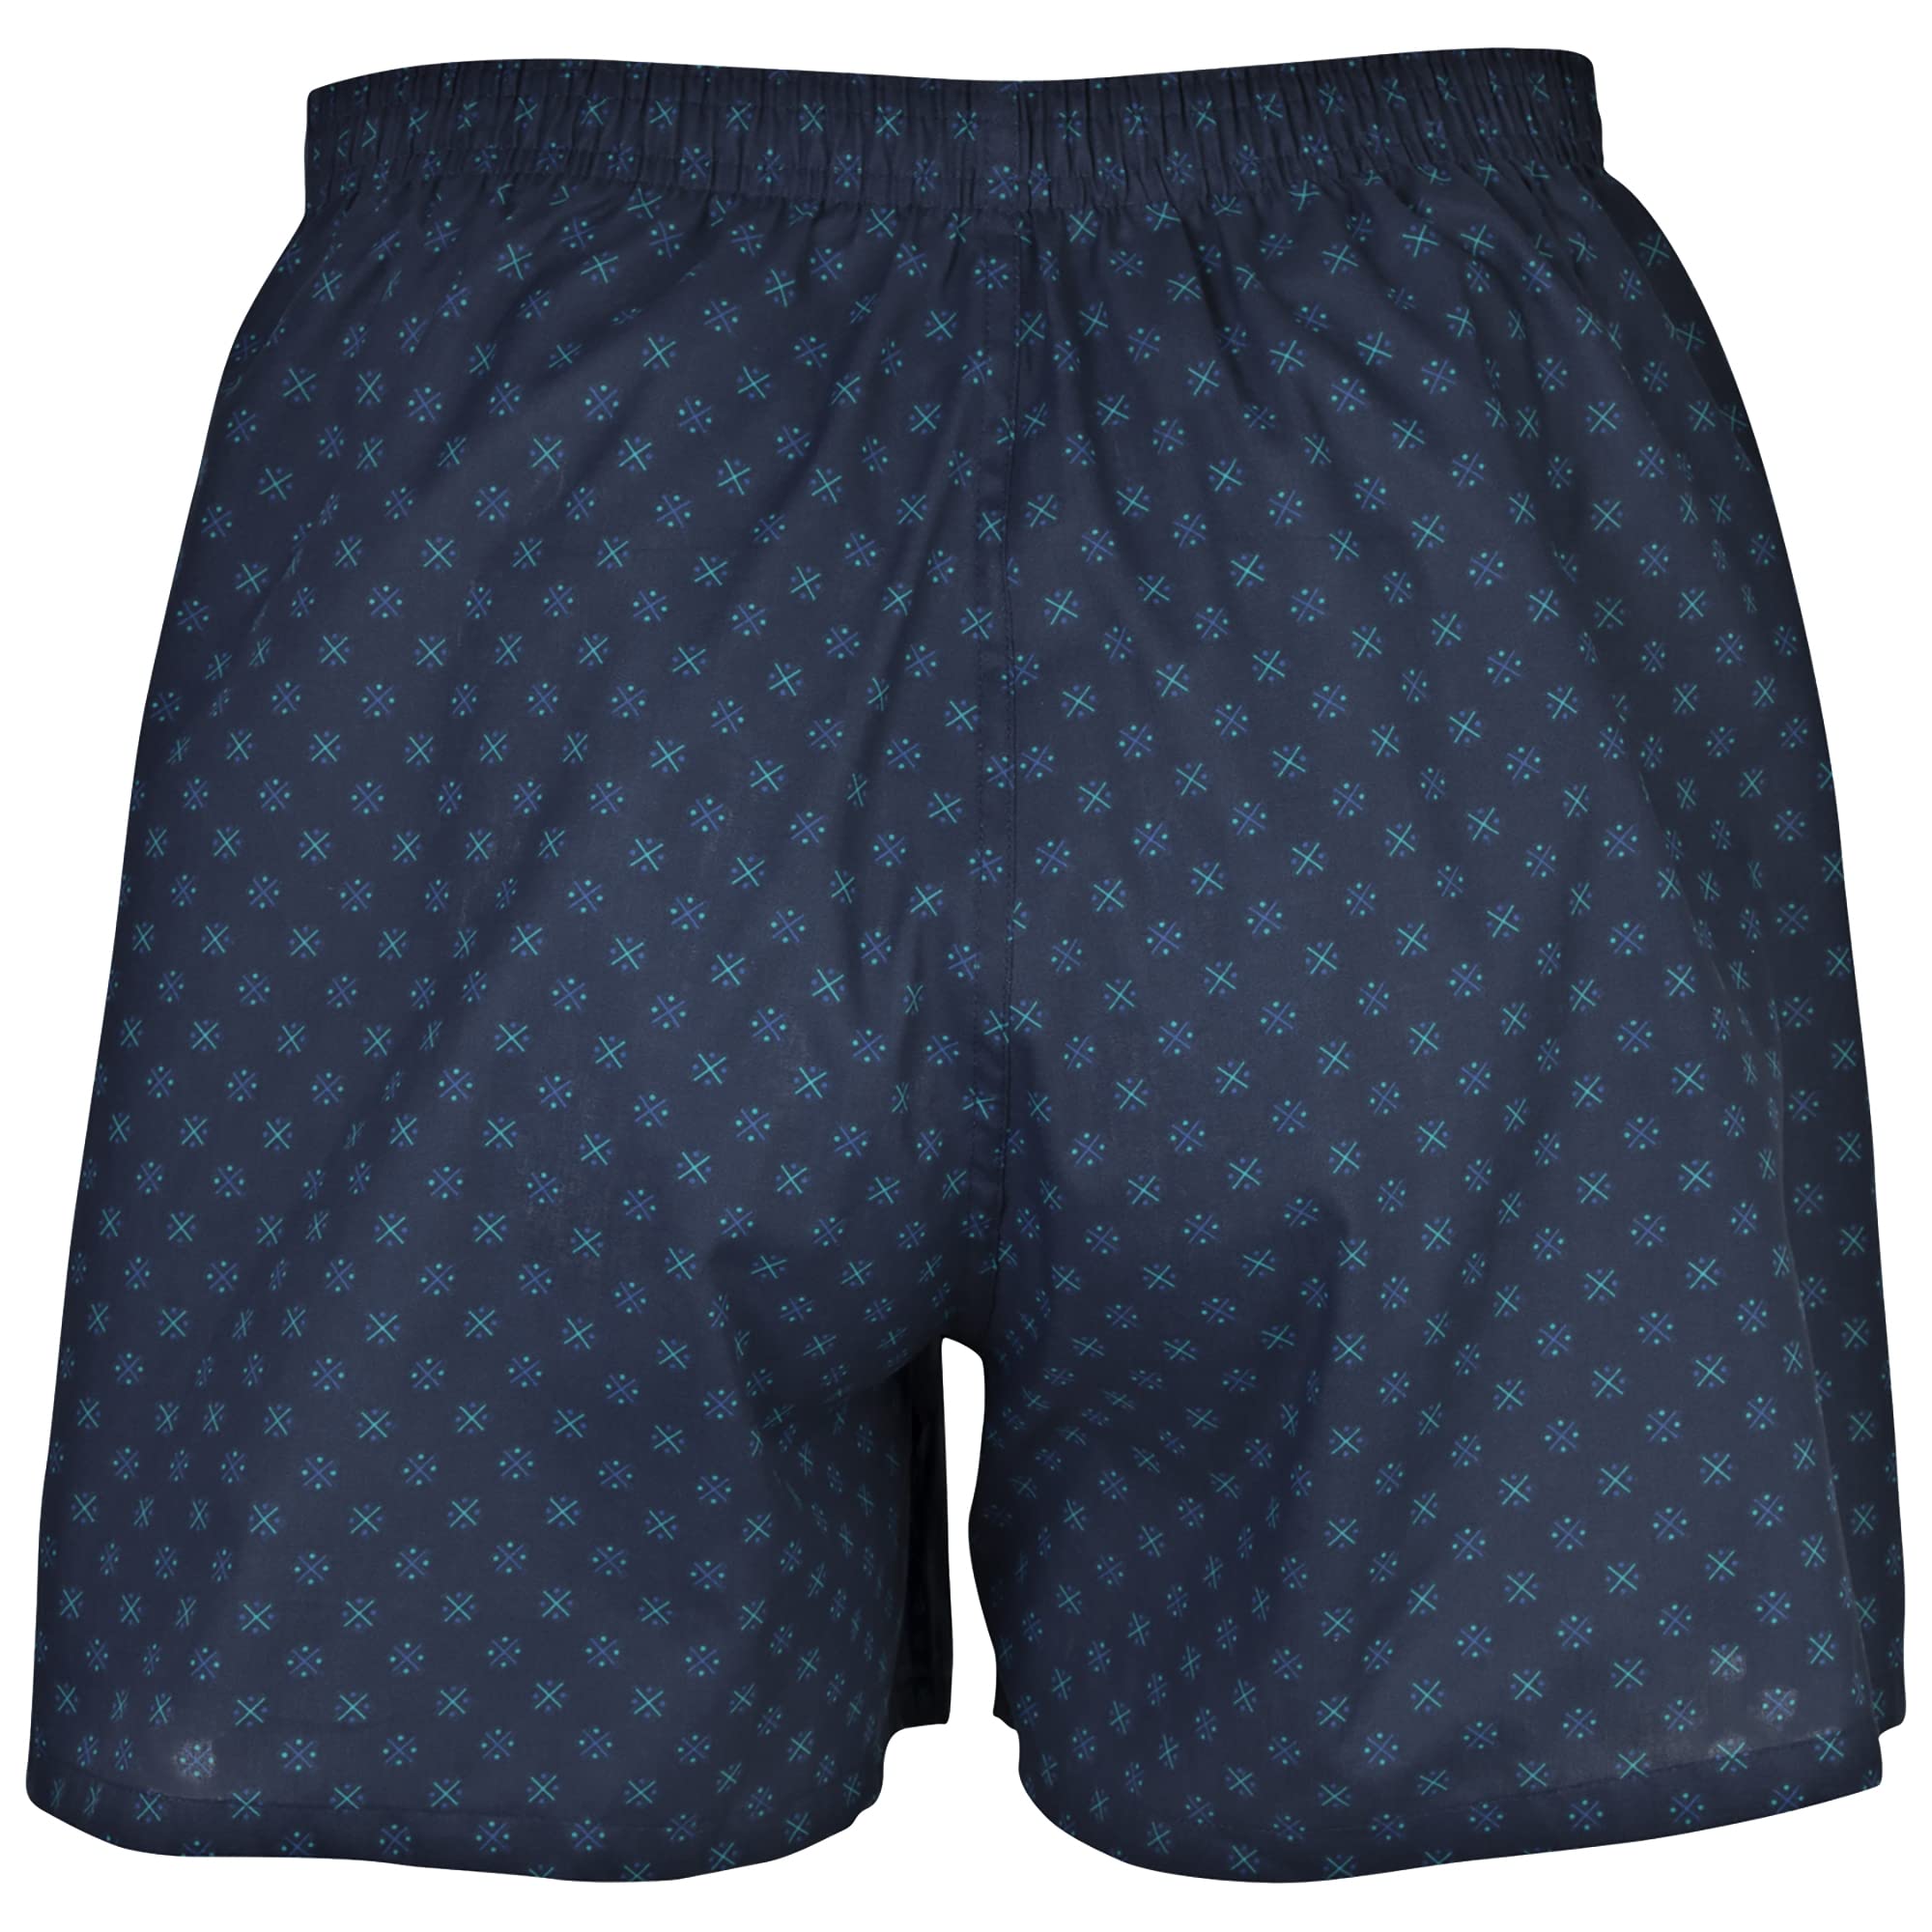 Gildan Men's Underwear Boxers, Multipack